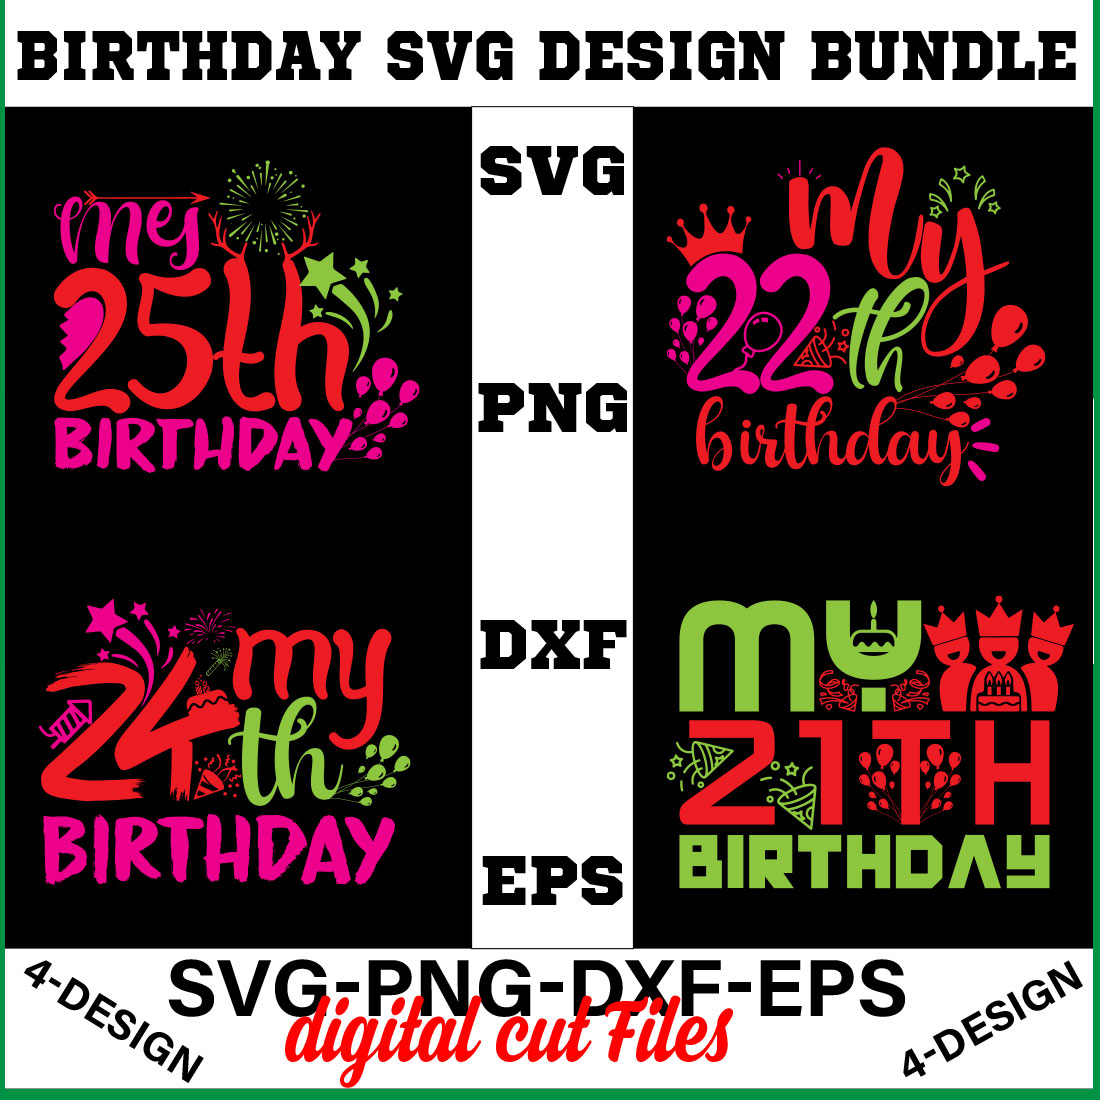 birthday svg design bundle Happy birthday svg bundle hand lettered birthday svg birthday party svg Volume-06 cover image.